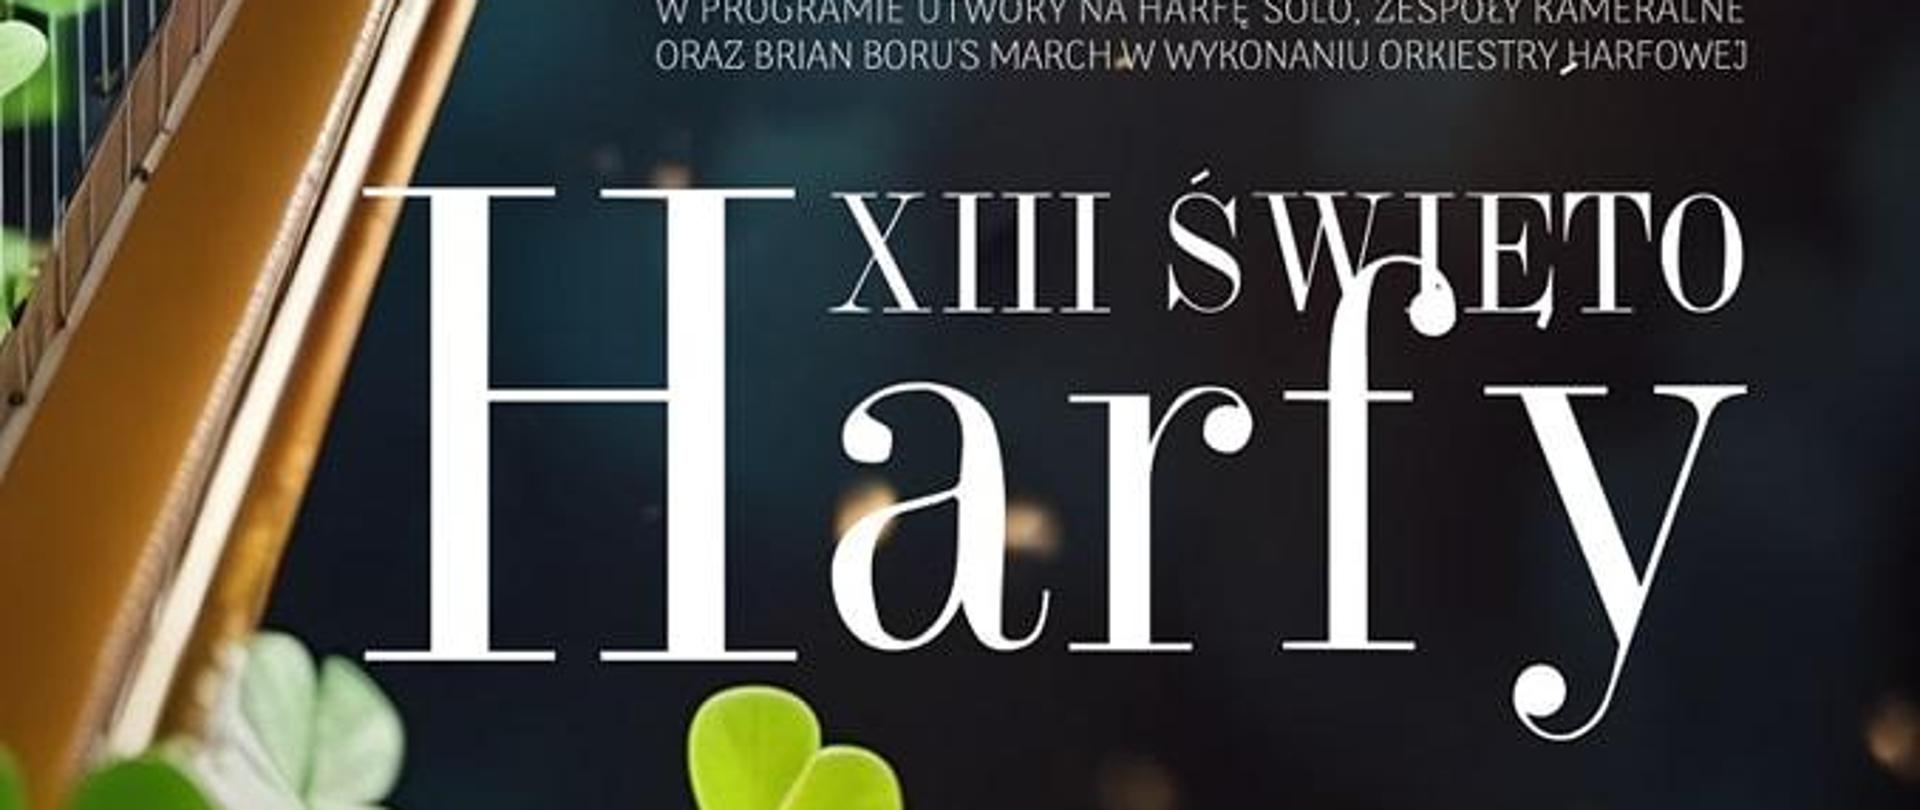 Plakat z Harfą w tle i terminem